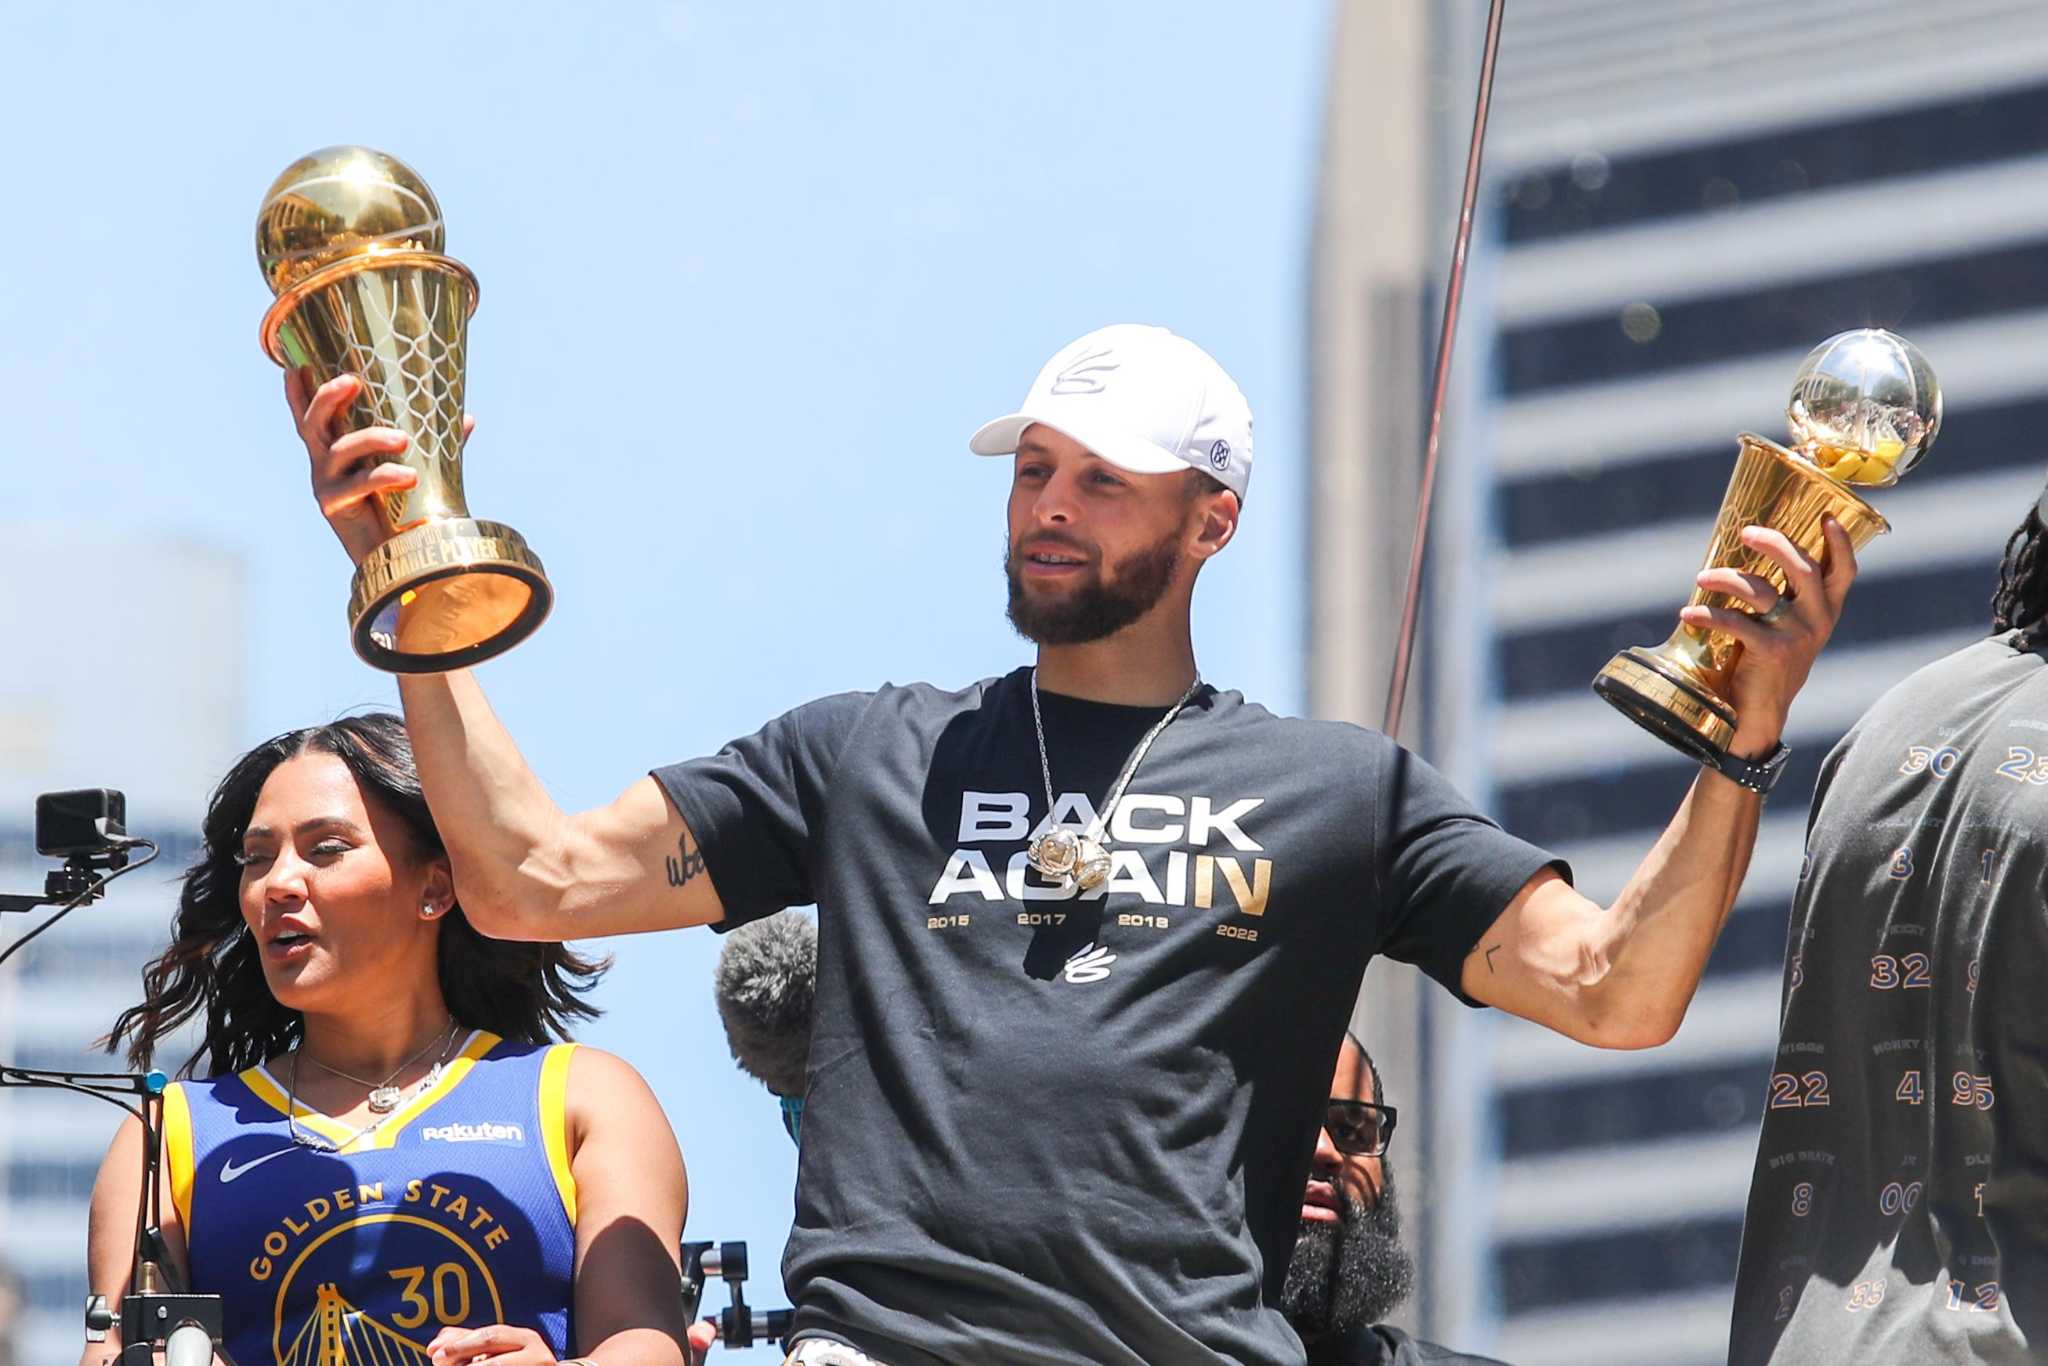 Warriors win 2022 NBA Championship, Stephen Curry named Finals MVP